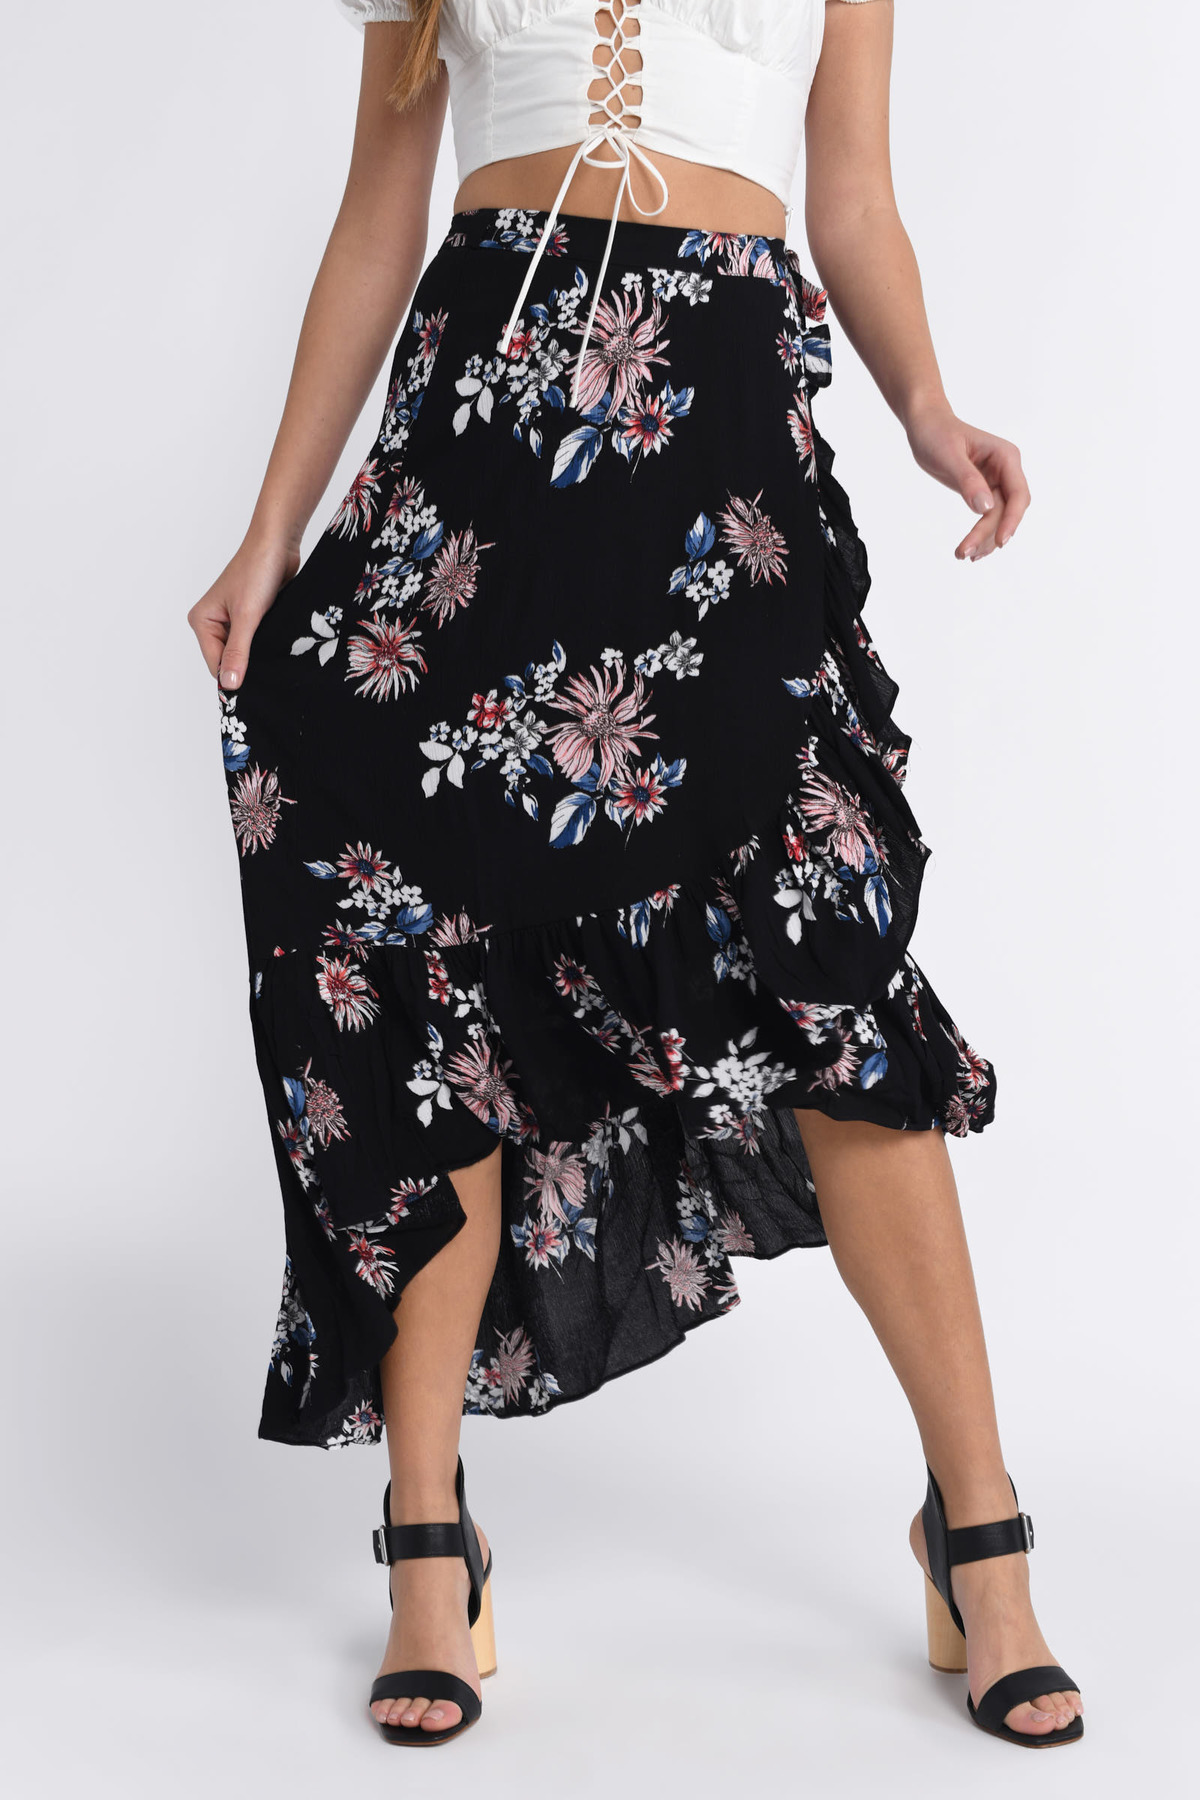 Black Skirt - Floral Print Maxi Skirt - Black High Low Skirt